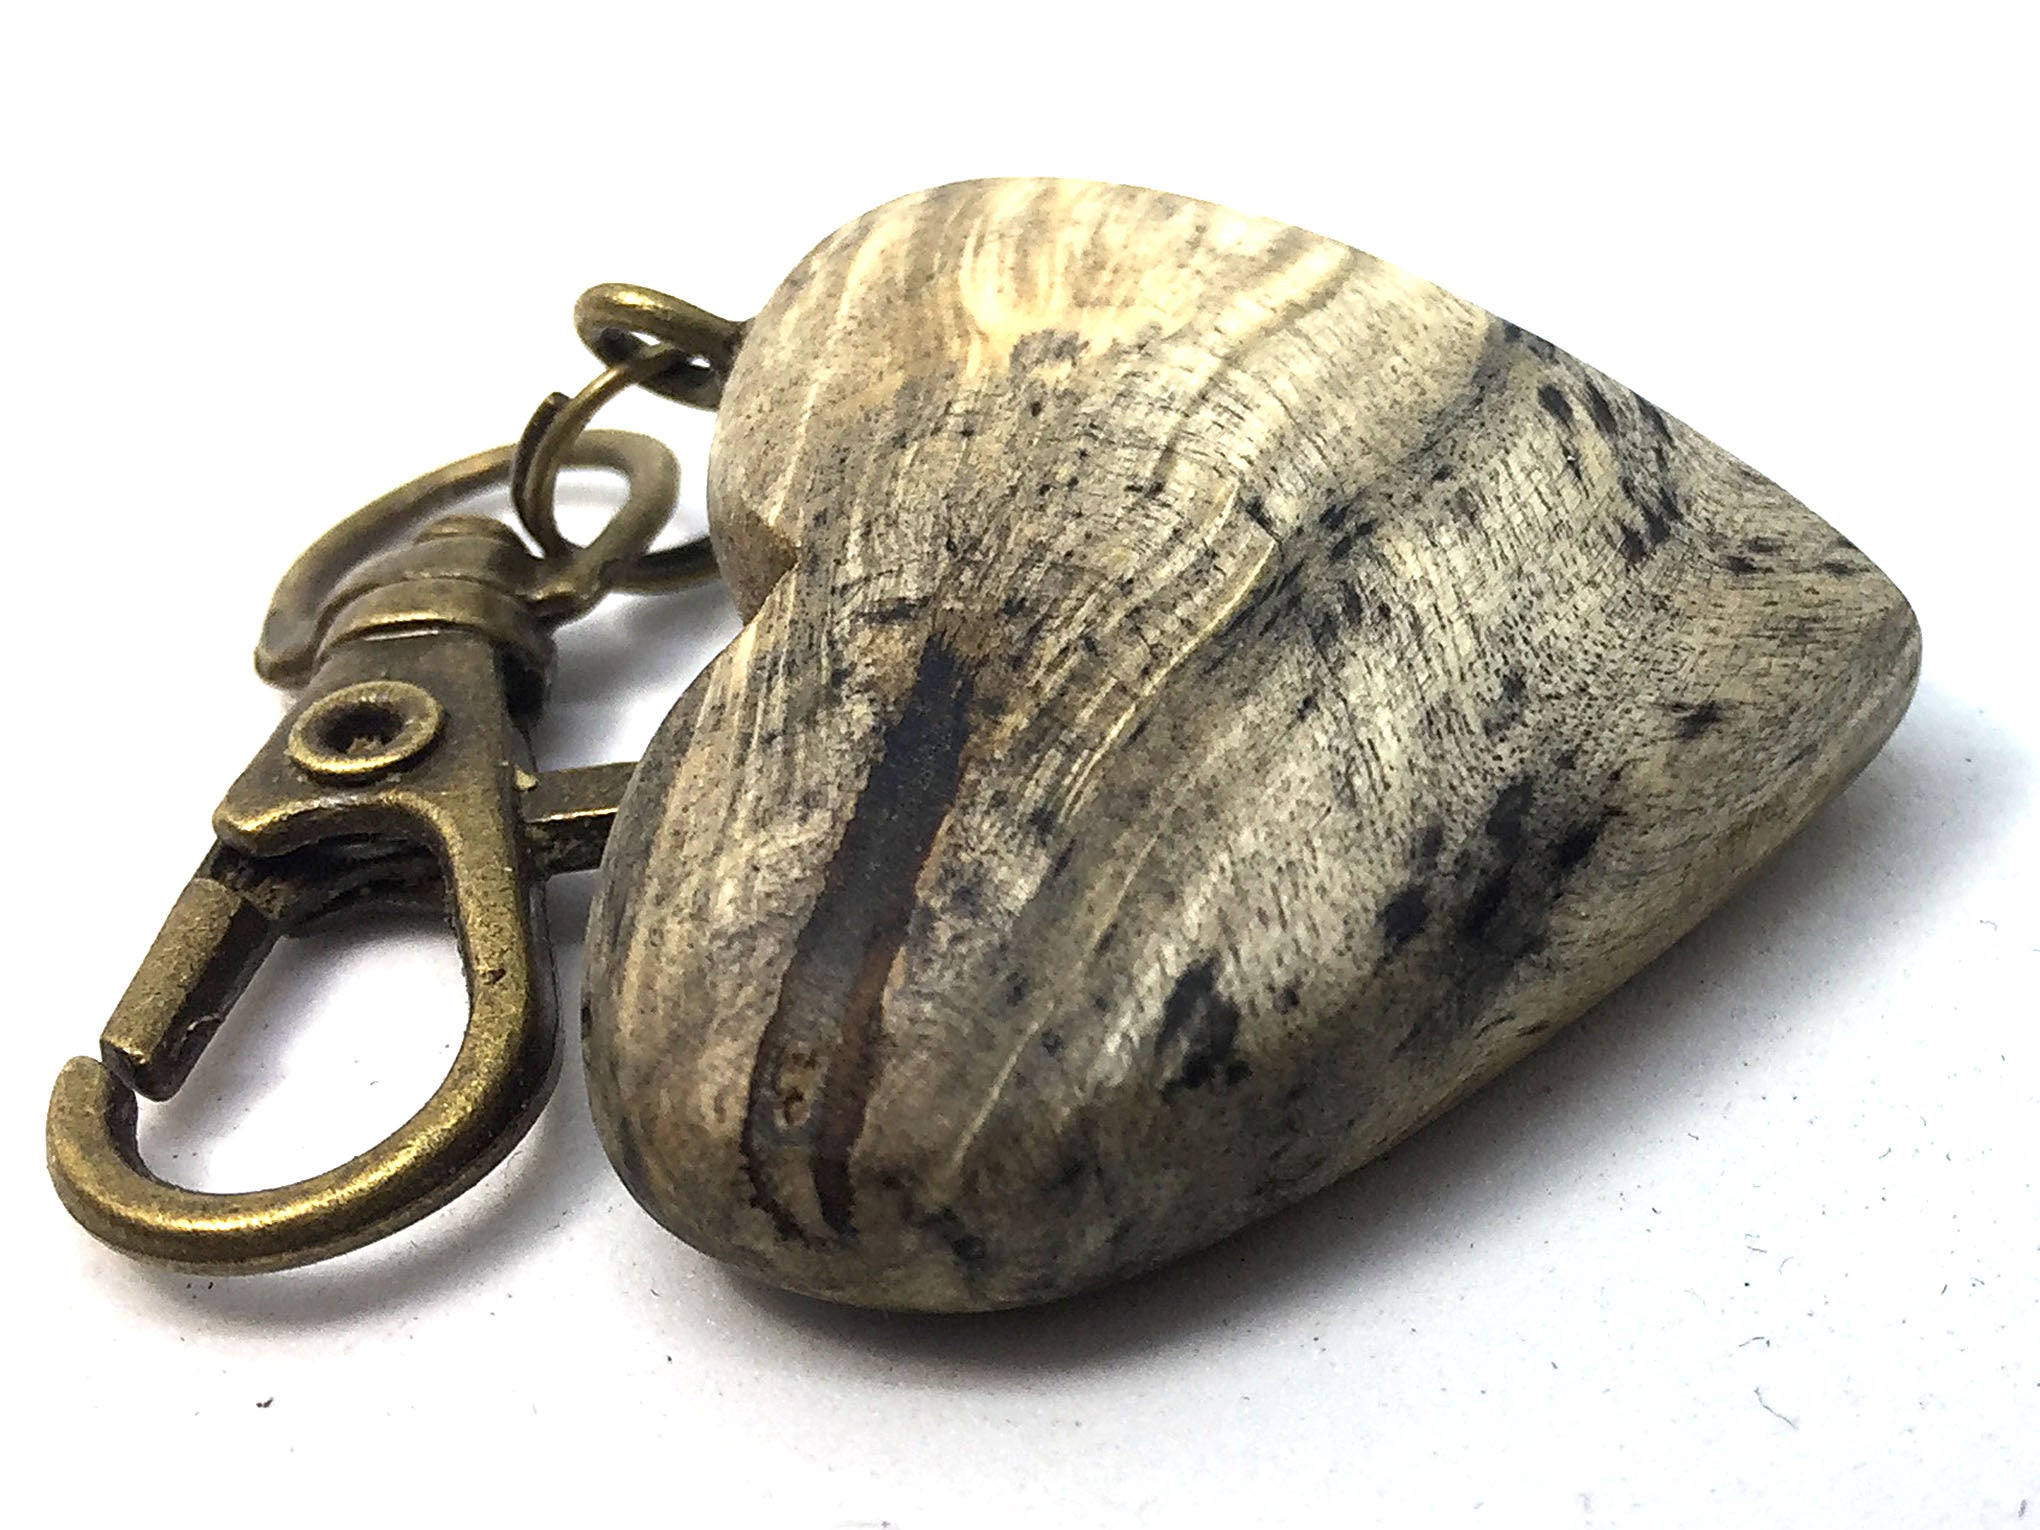 LV-4329 California Buckeye Burl Wooden Heart Shaped Charm, Keychain, Unique Hand Made